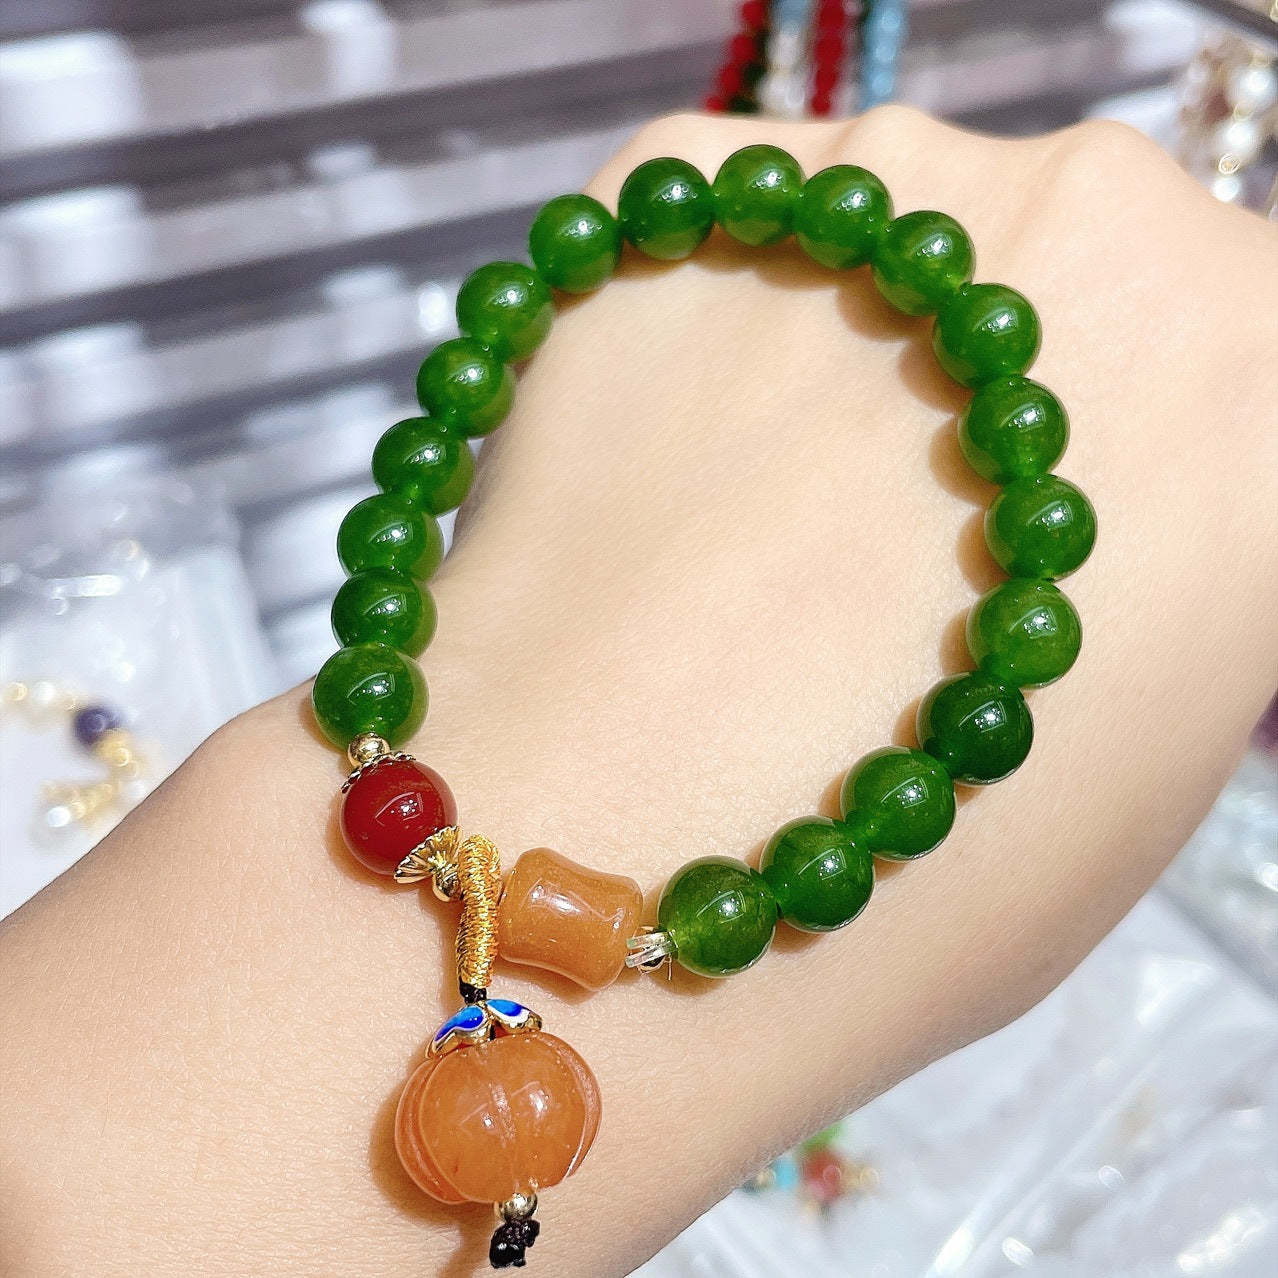 Personalized Bracelet Exquisite Jade Pendant Bracelet Gifts - soufeelmy